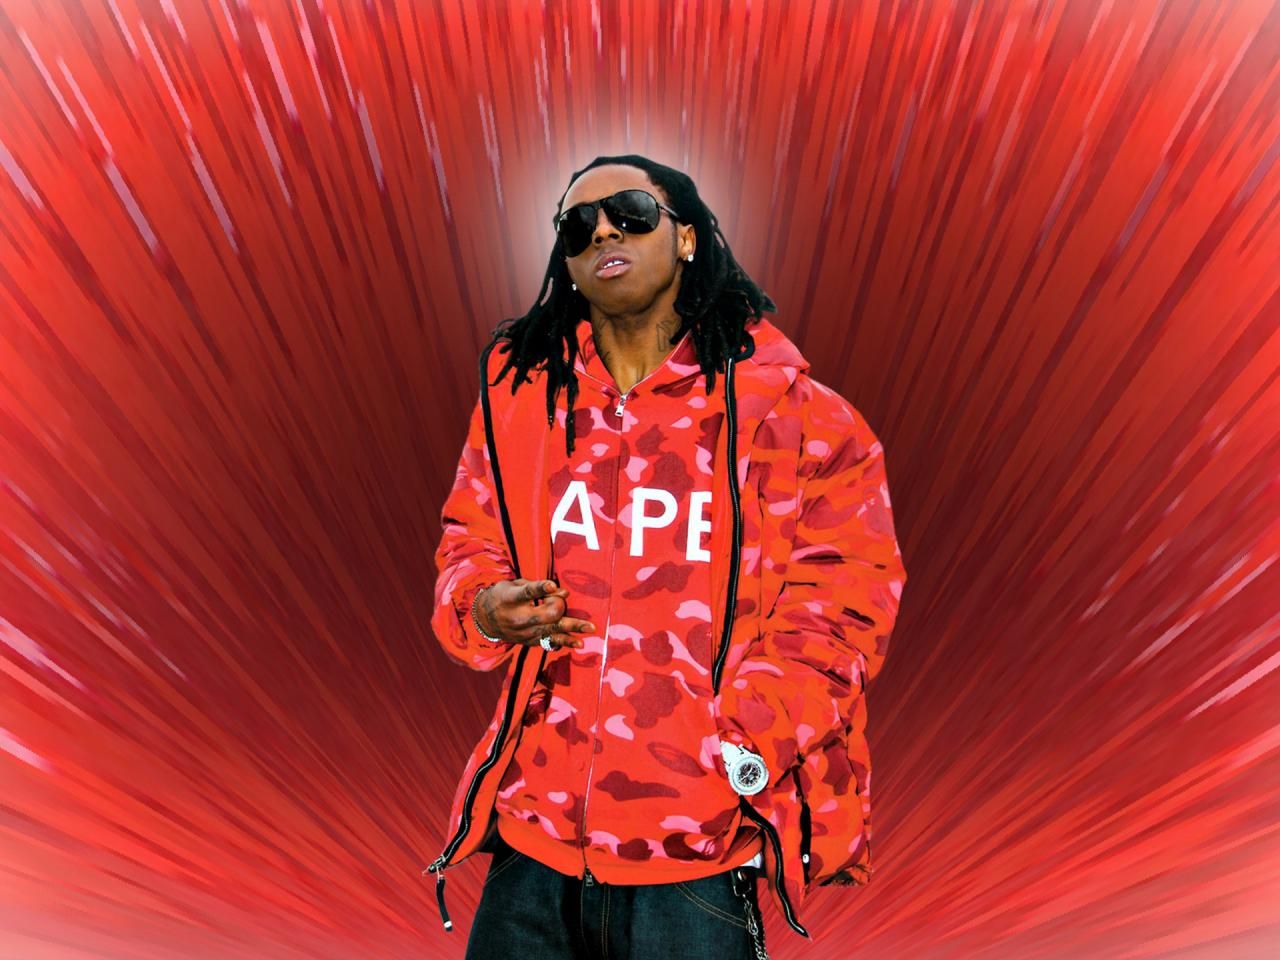 Awur Awuran Lil Wayne Wallpapers Lil Wayne Popular Pictures Rap